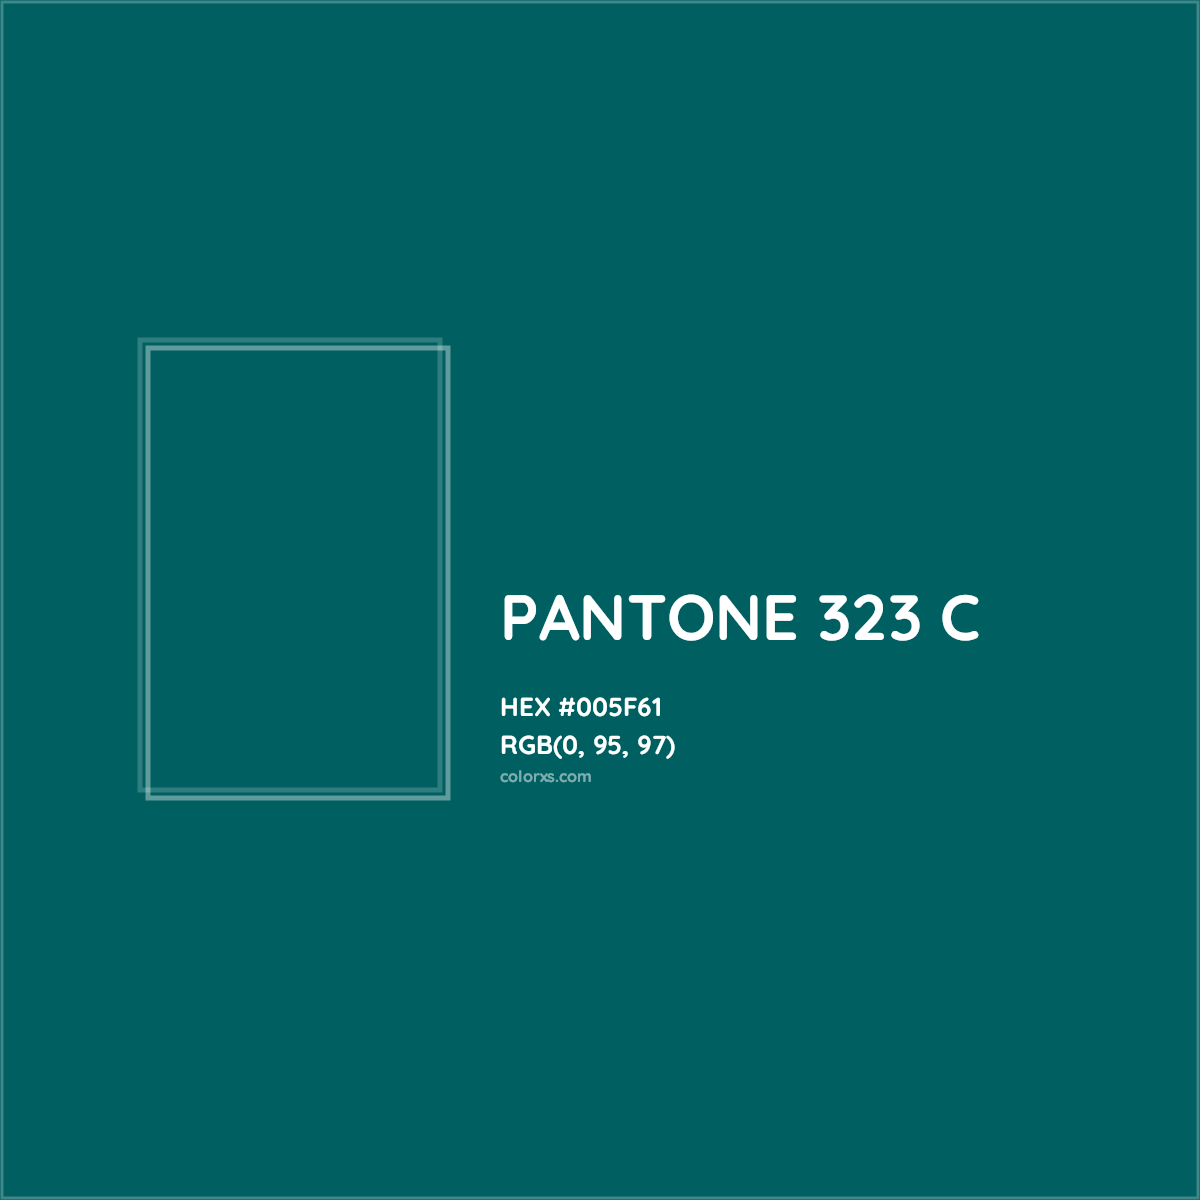 HEX #005F61 PANTONE 323 C CMS Pantone PMS - Color Code